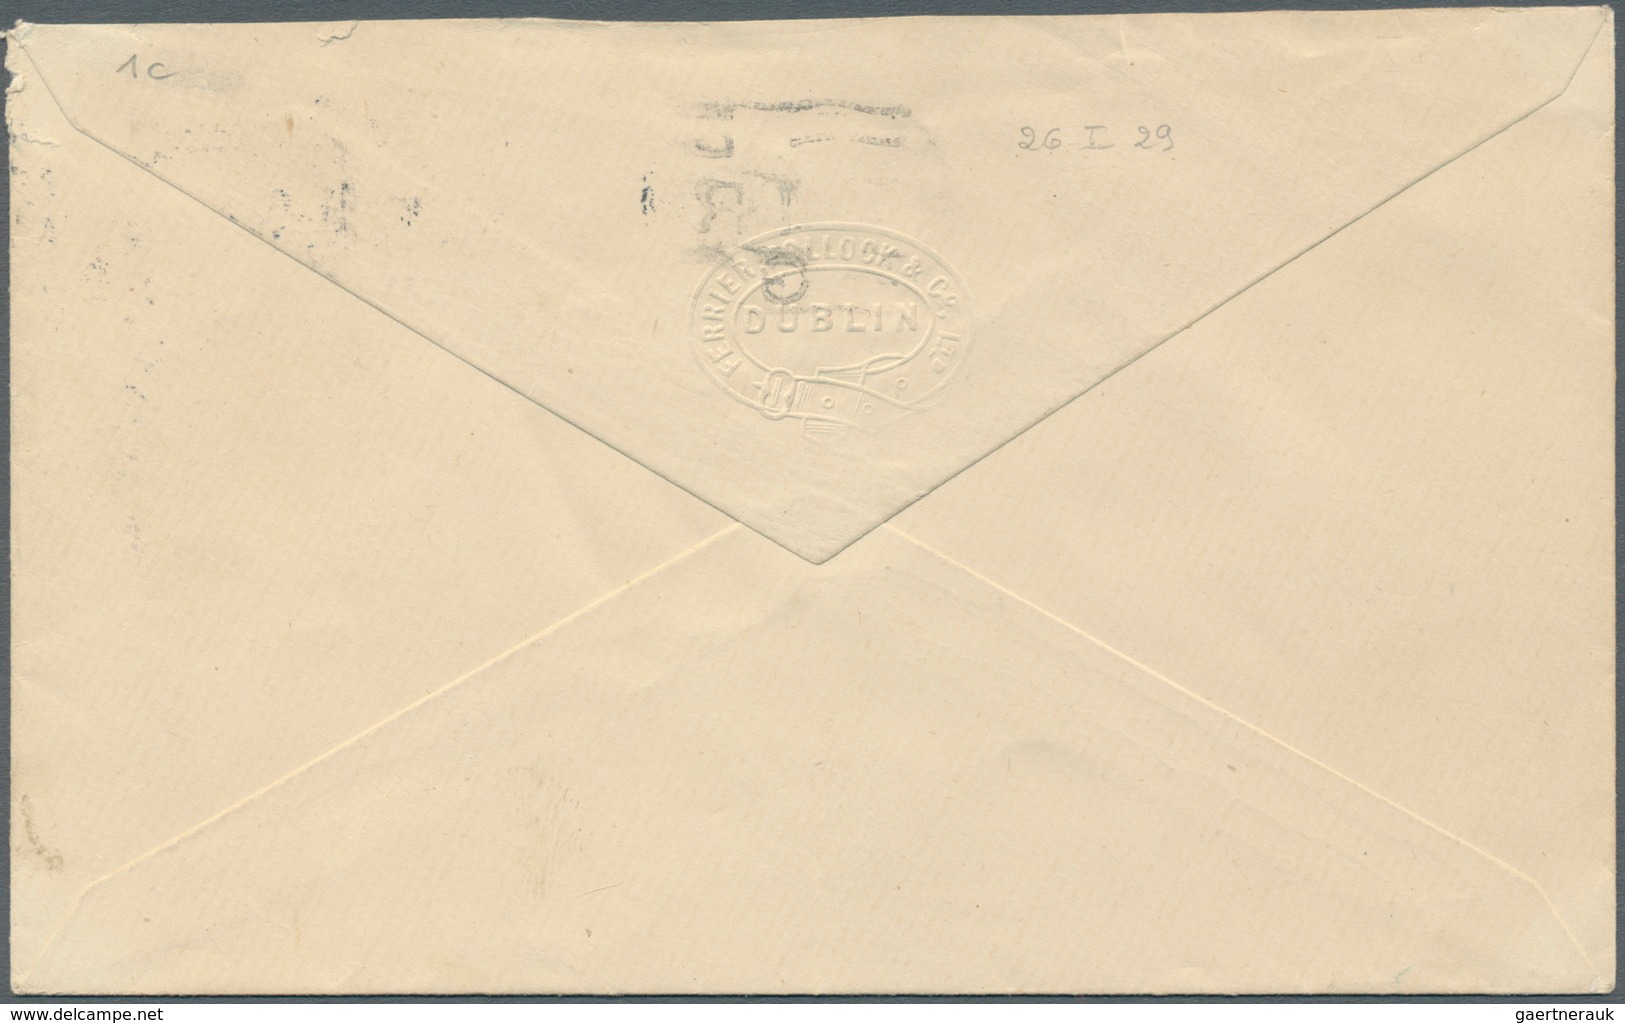 Irland - Ganzsachen: Ferrier, Pollock & Co., Ldt., Dublin: 1925/30, 2 d. olive green envelope with s